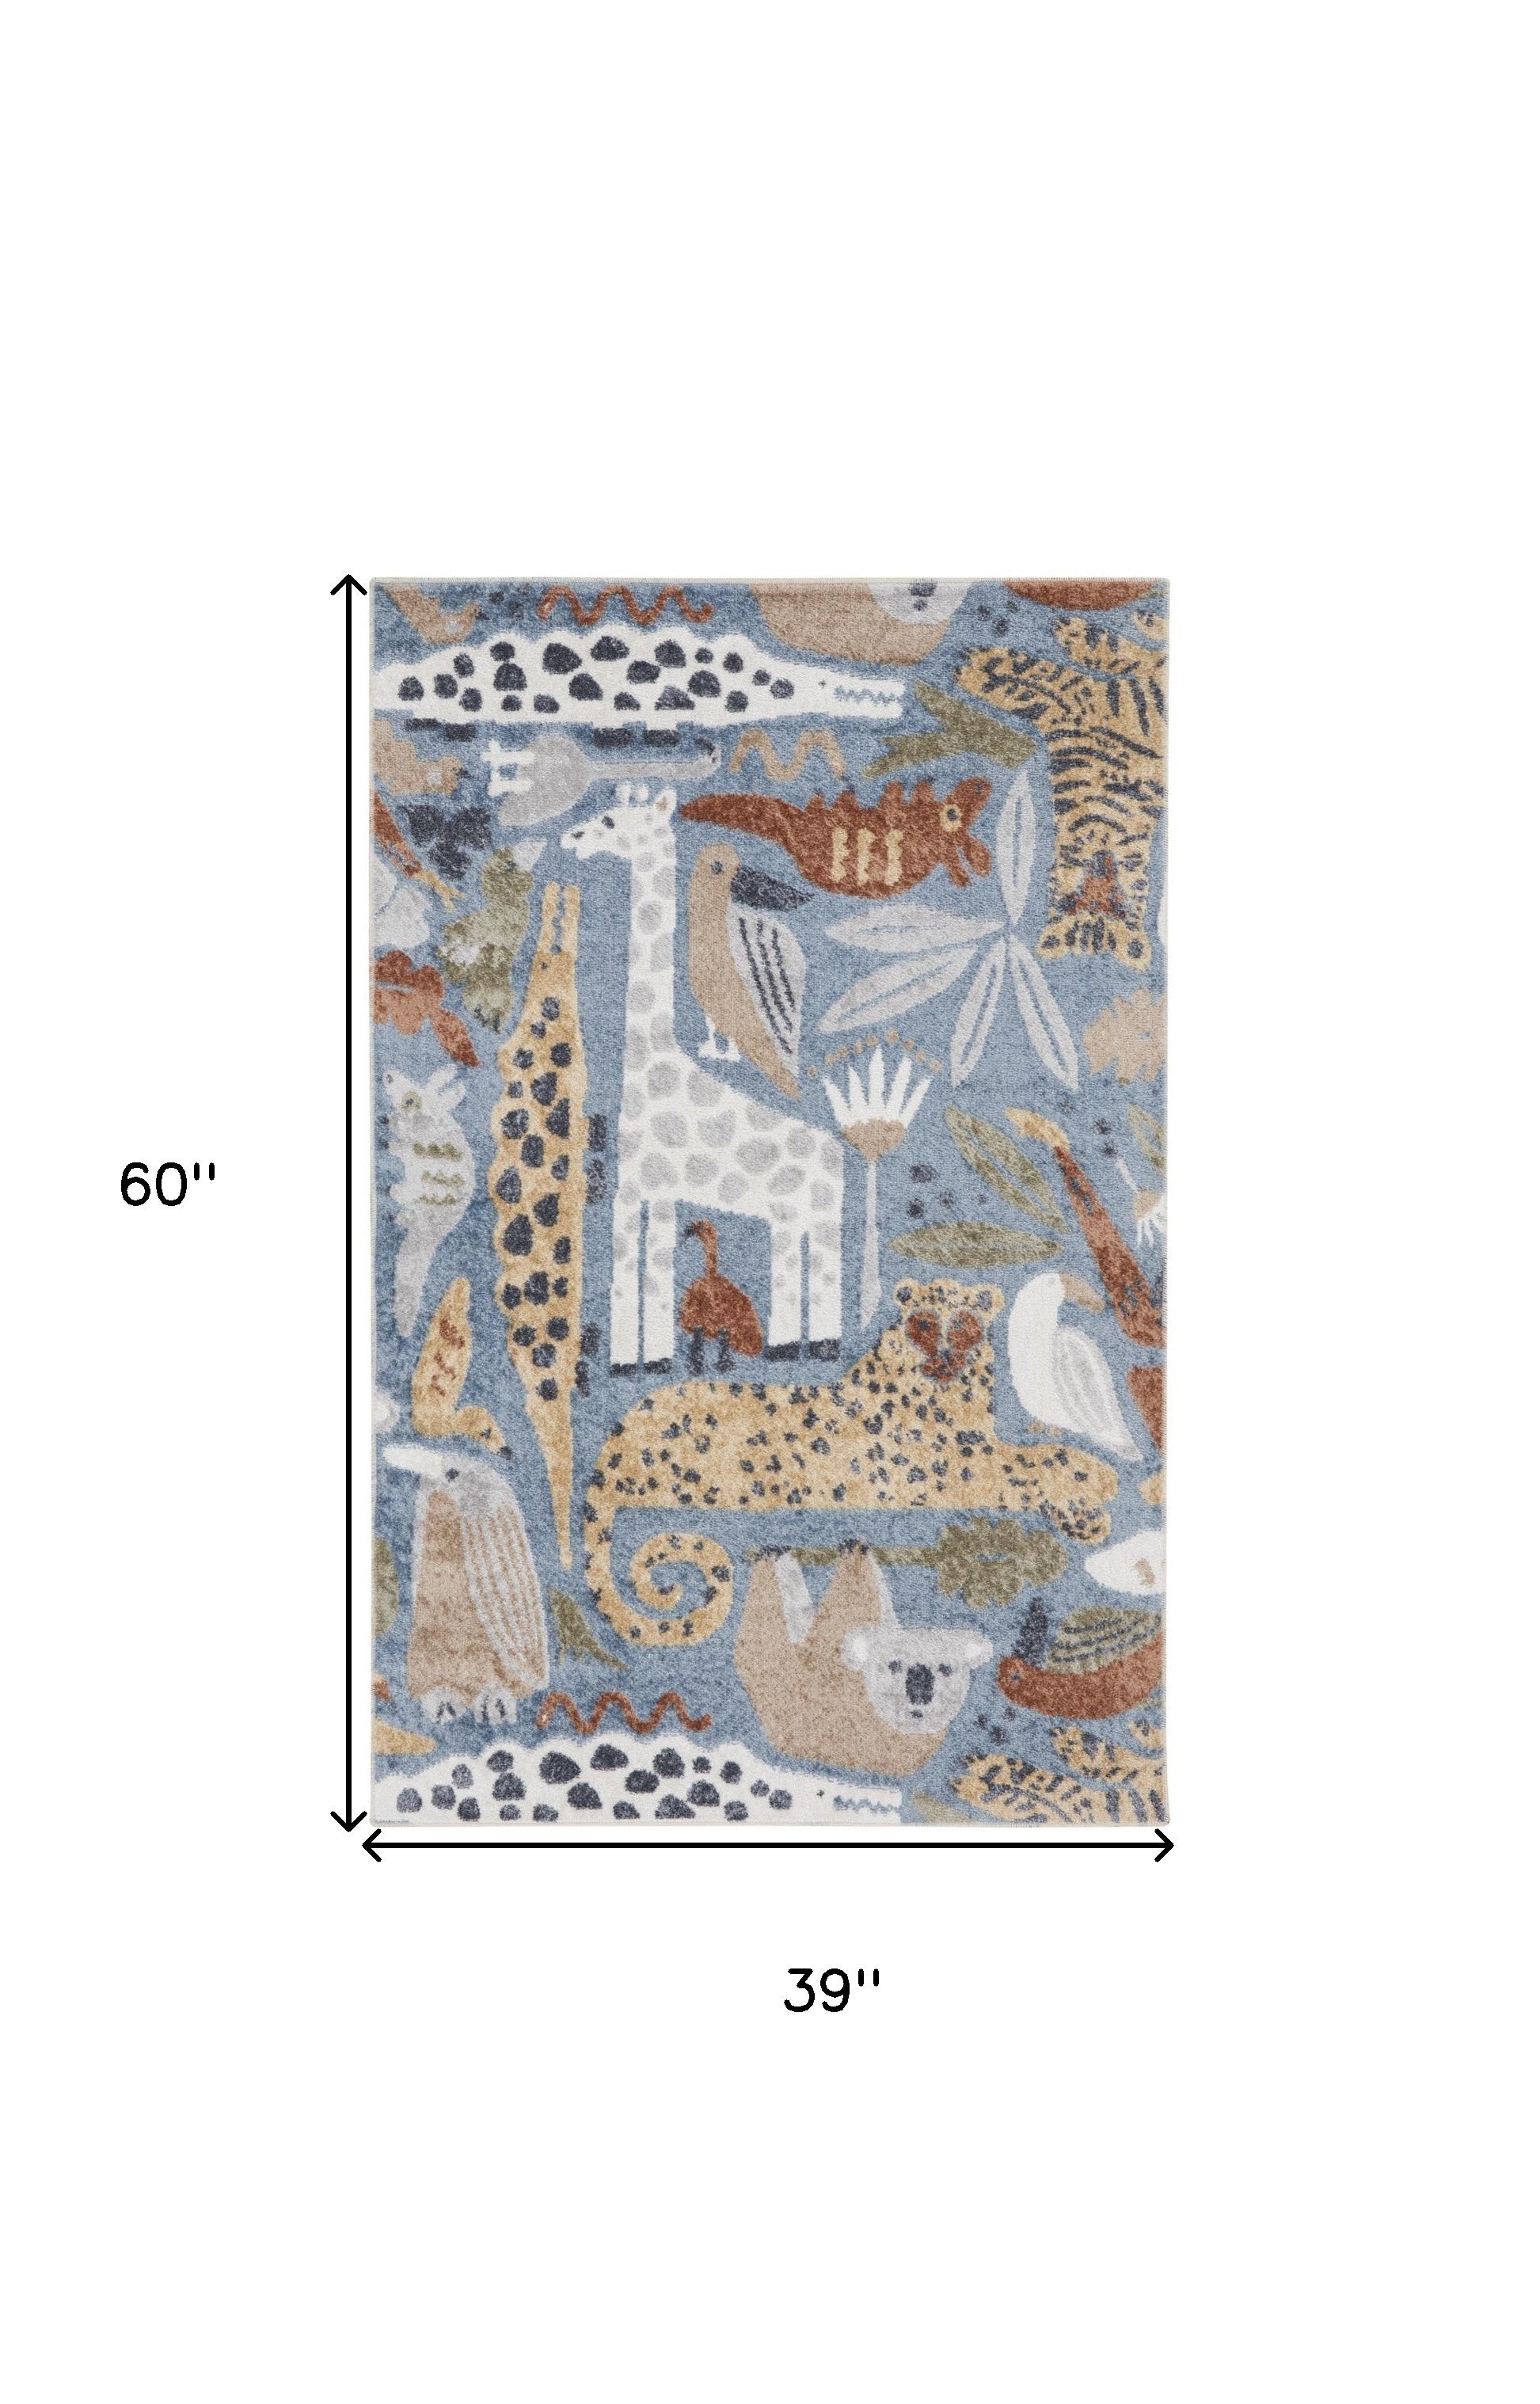 3' X 5' Ivory Blue and Gray Kids Safar Animal Print Washable Area Rug